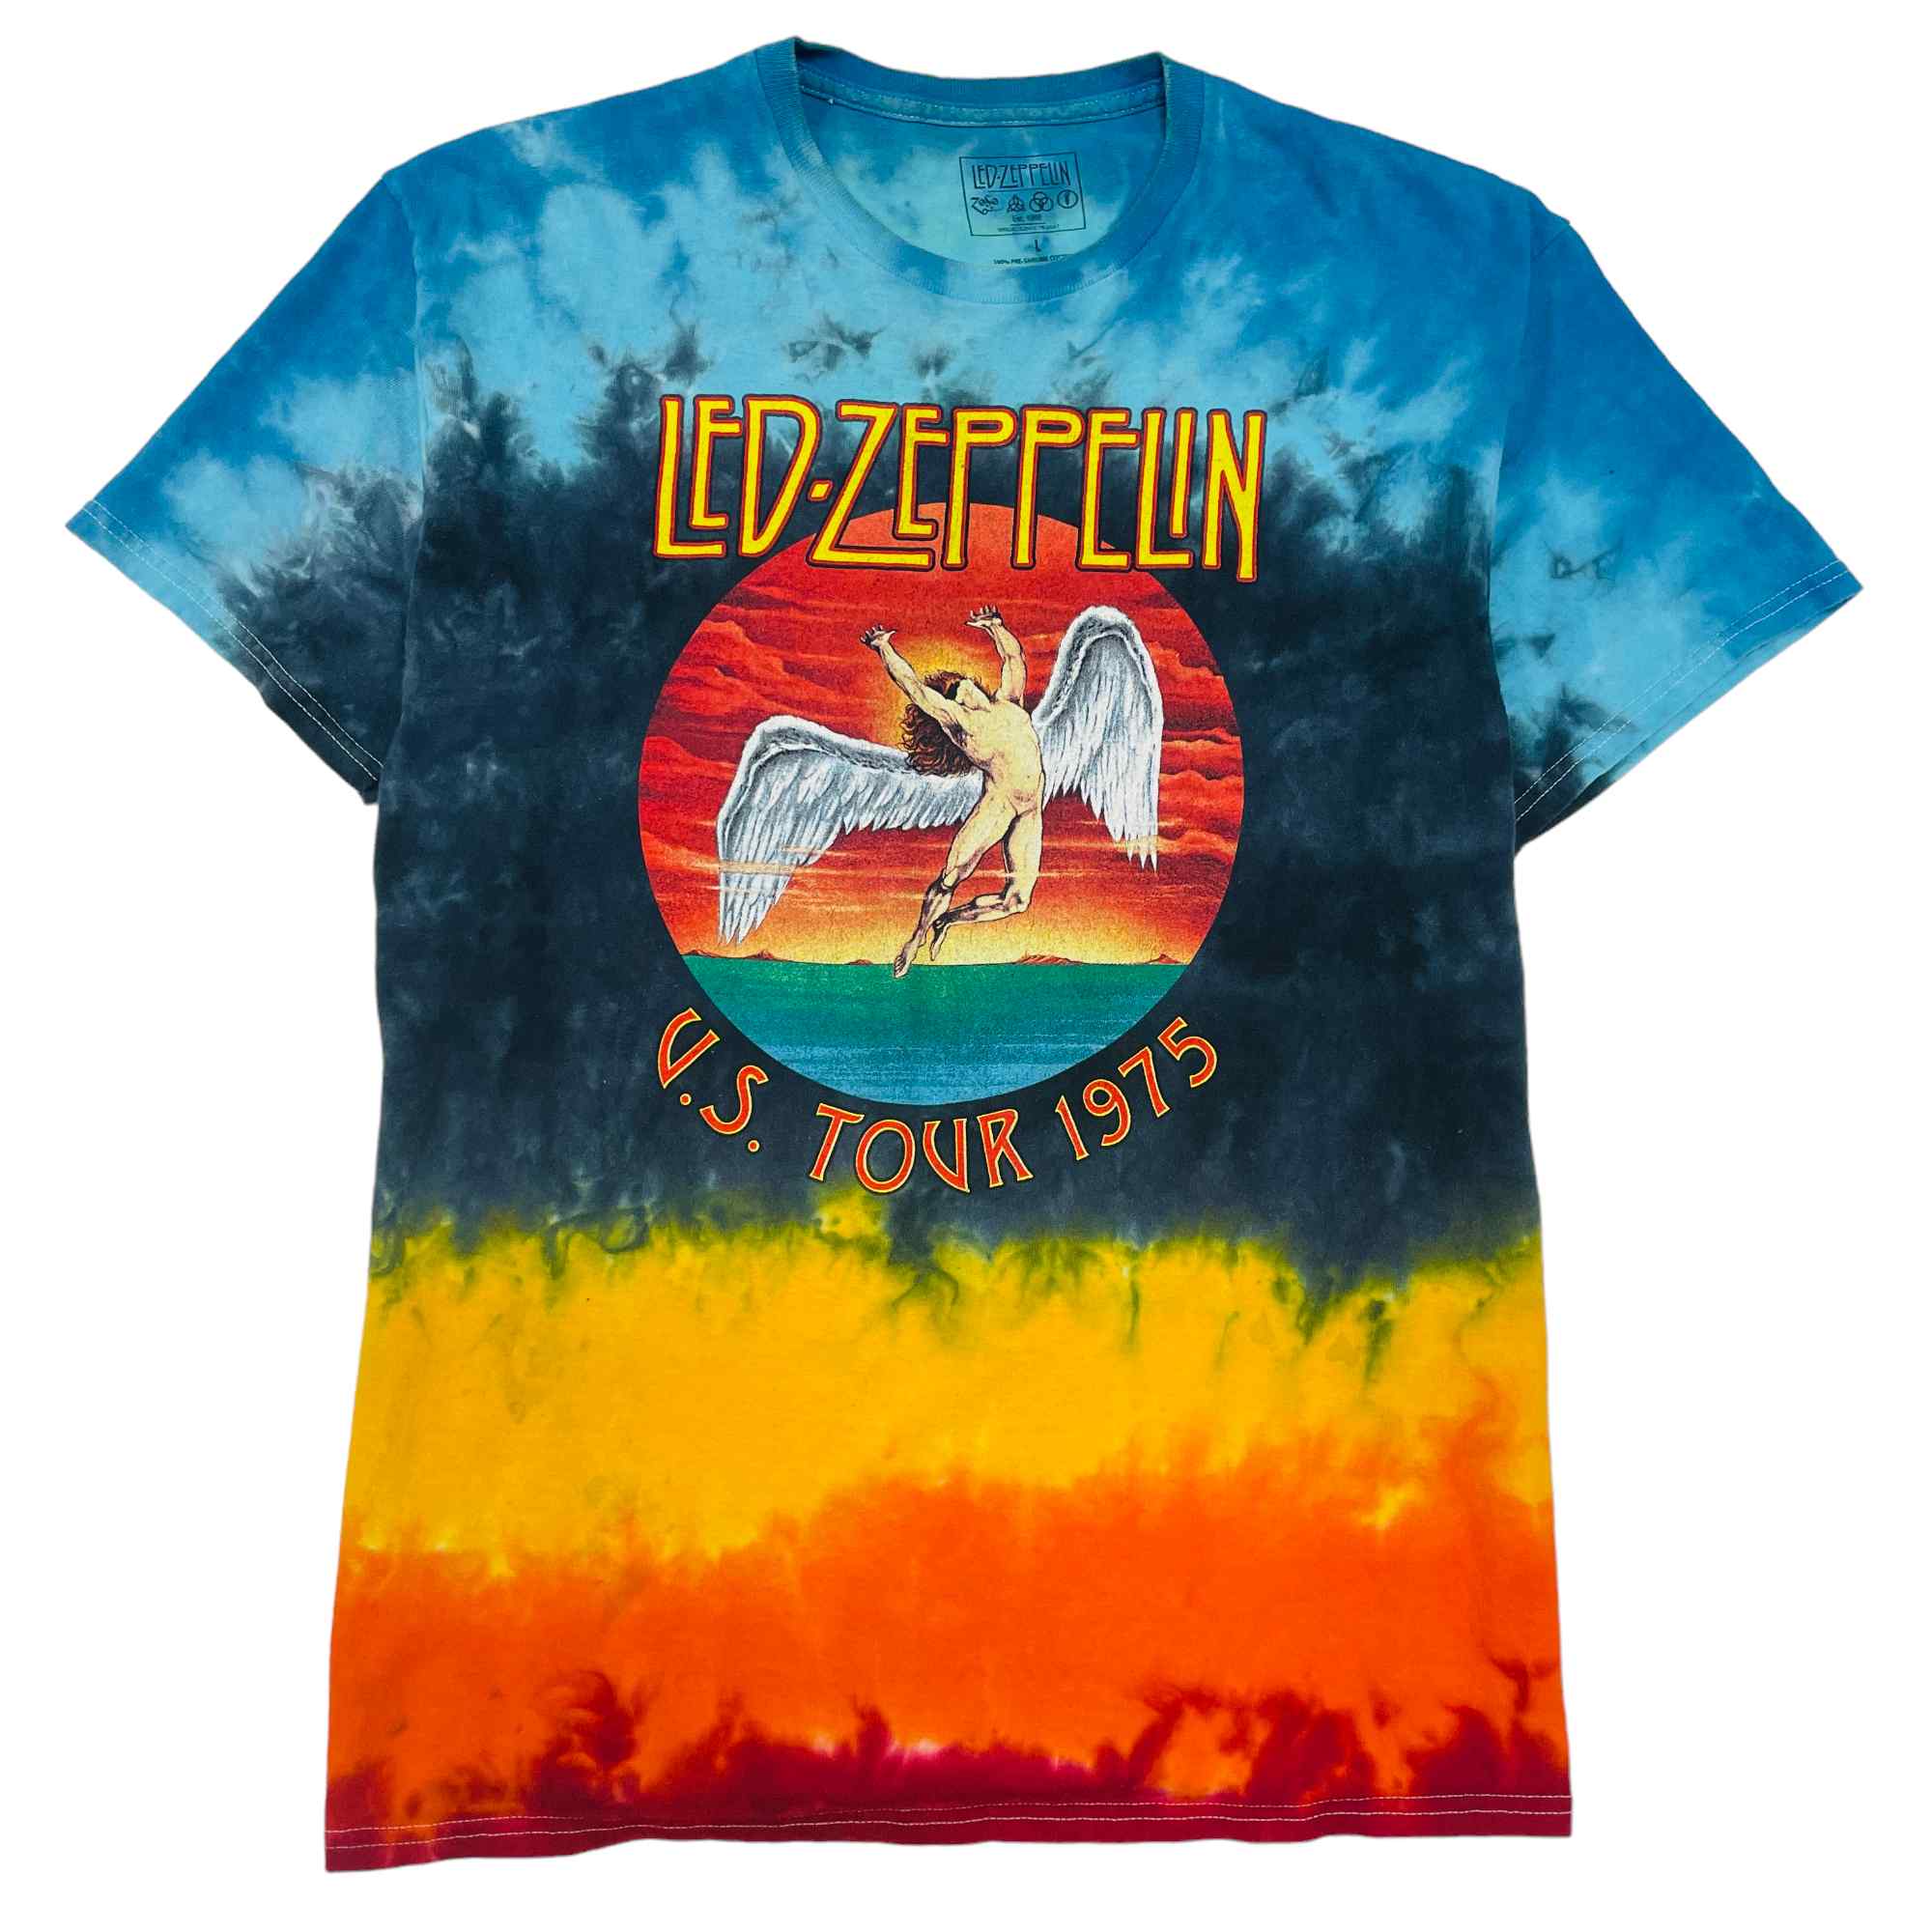 'U.S Tour 1975' Led Zeppelin T-Shirt - Large